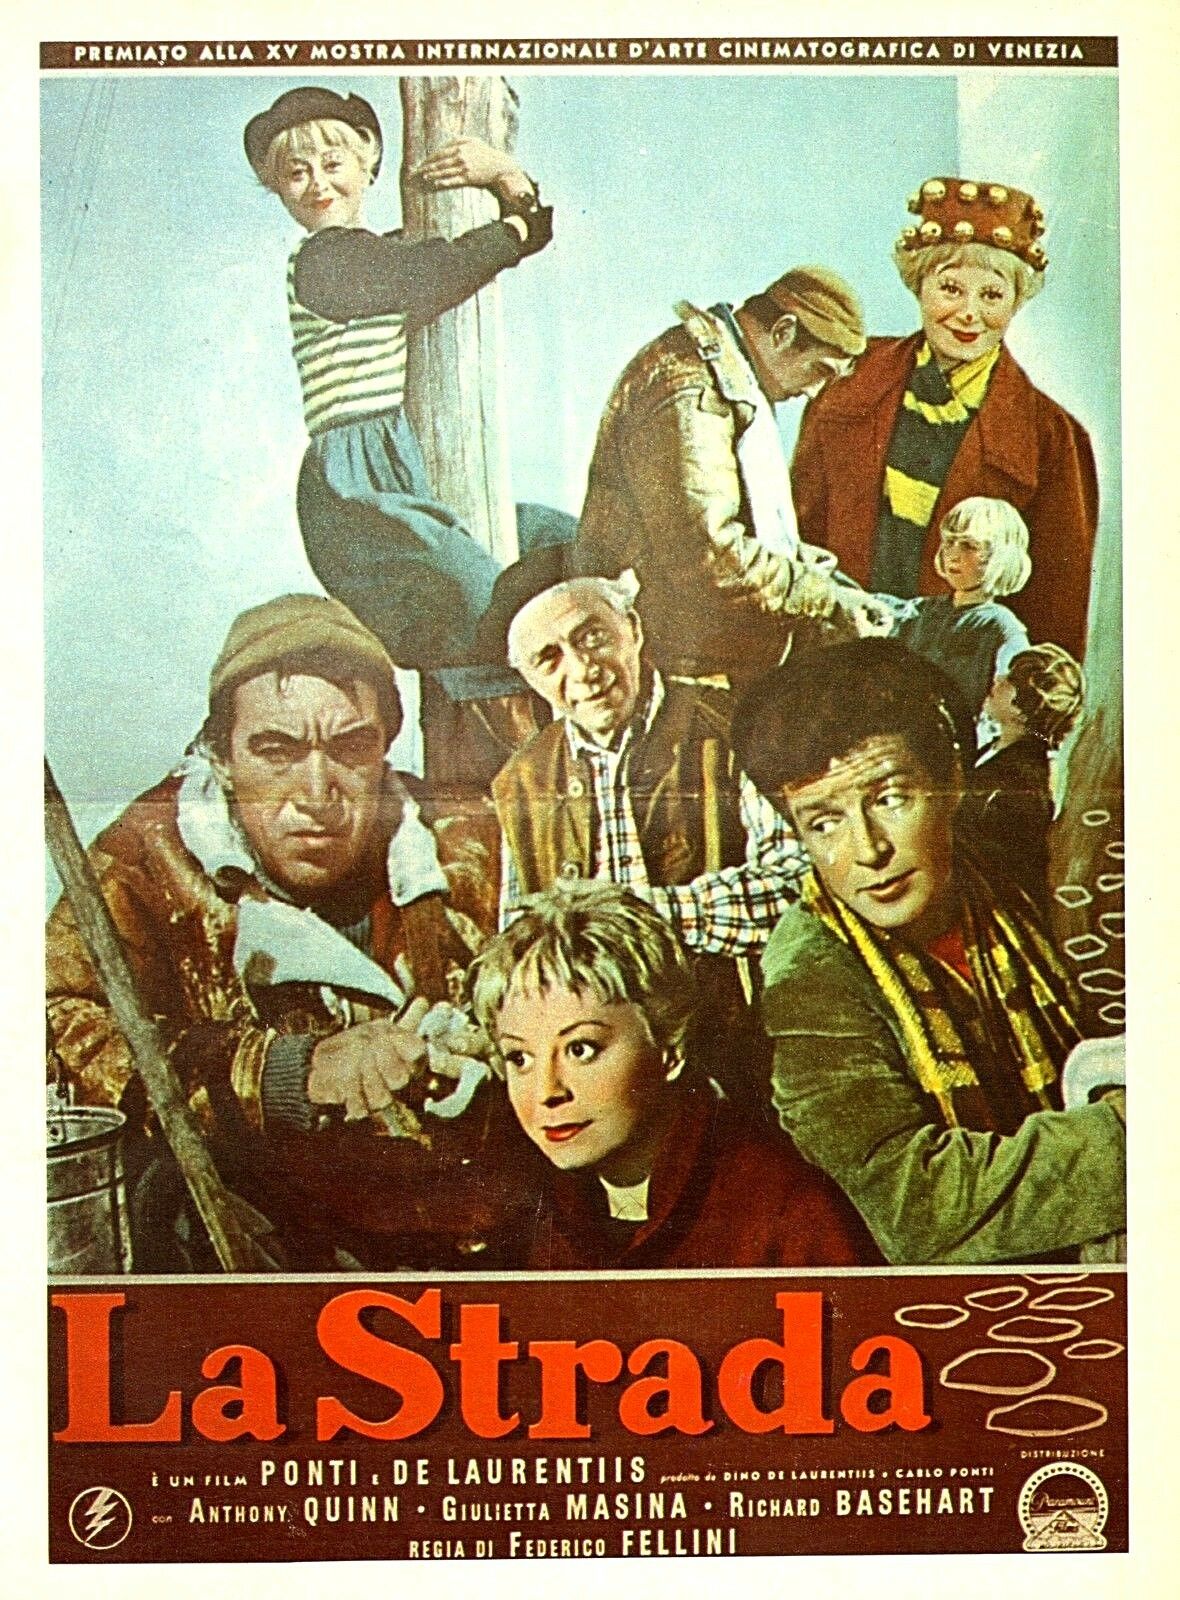 La Strada, film poster